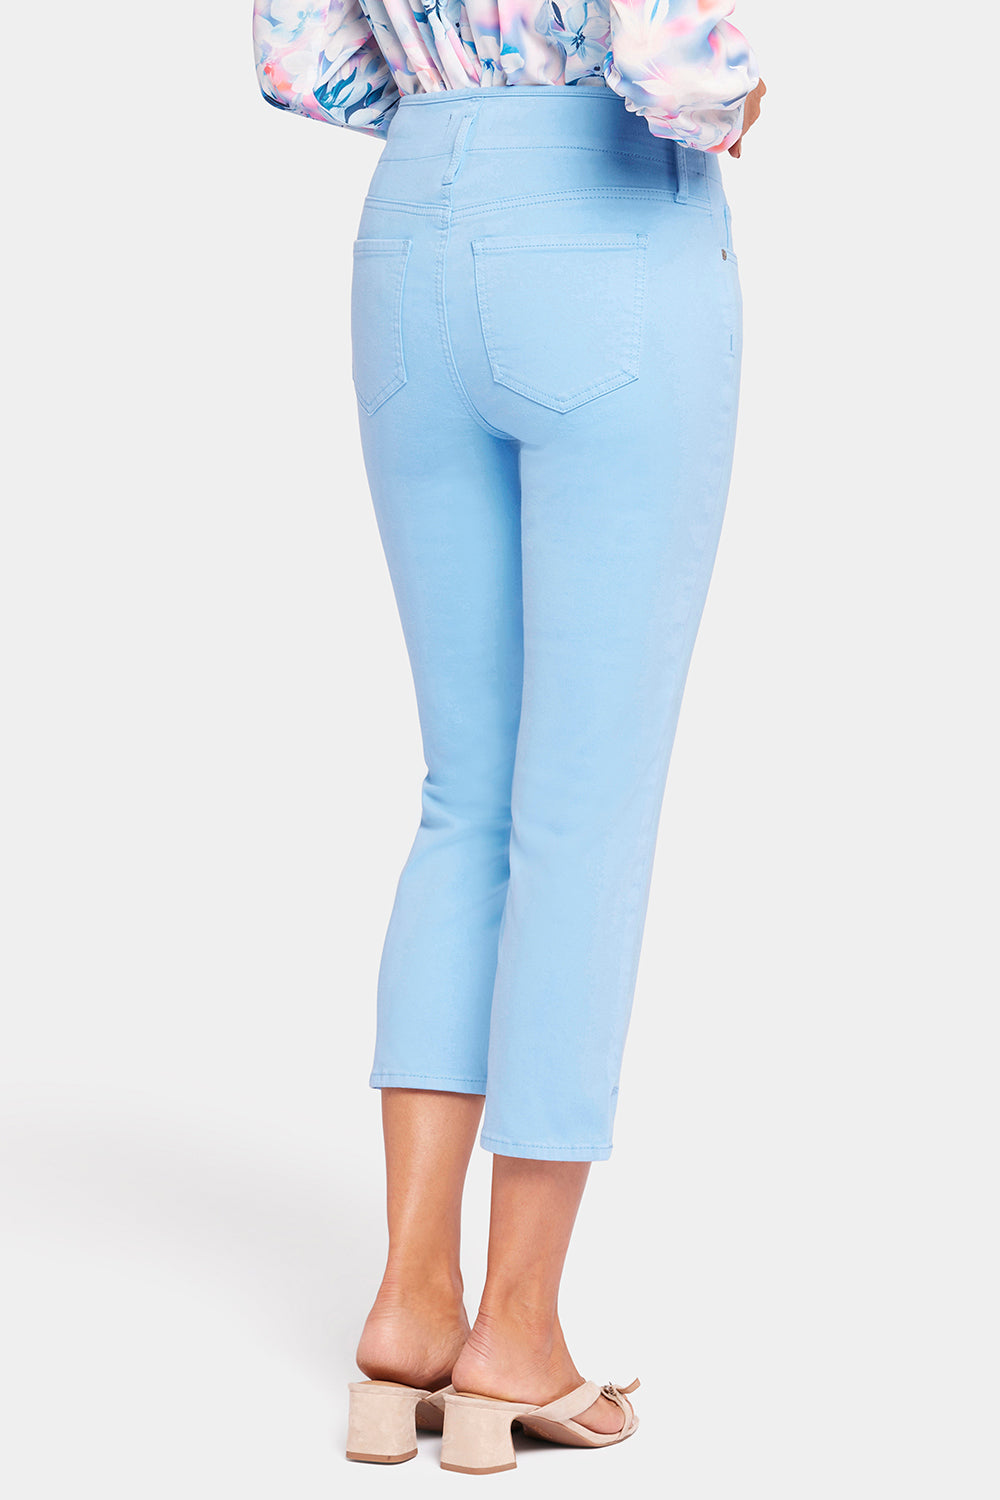 NYDJ Chloe Capri Jeans With Side Slits - Bluebell